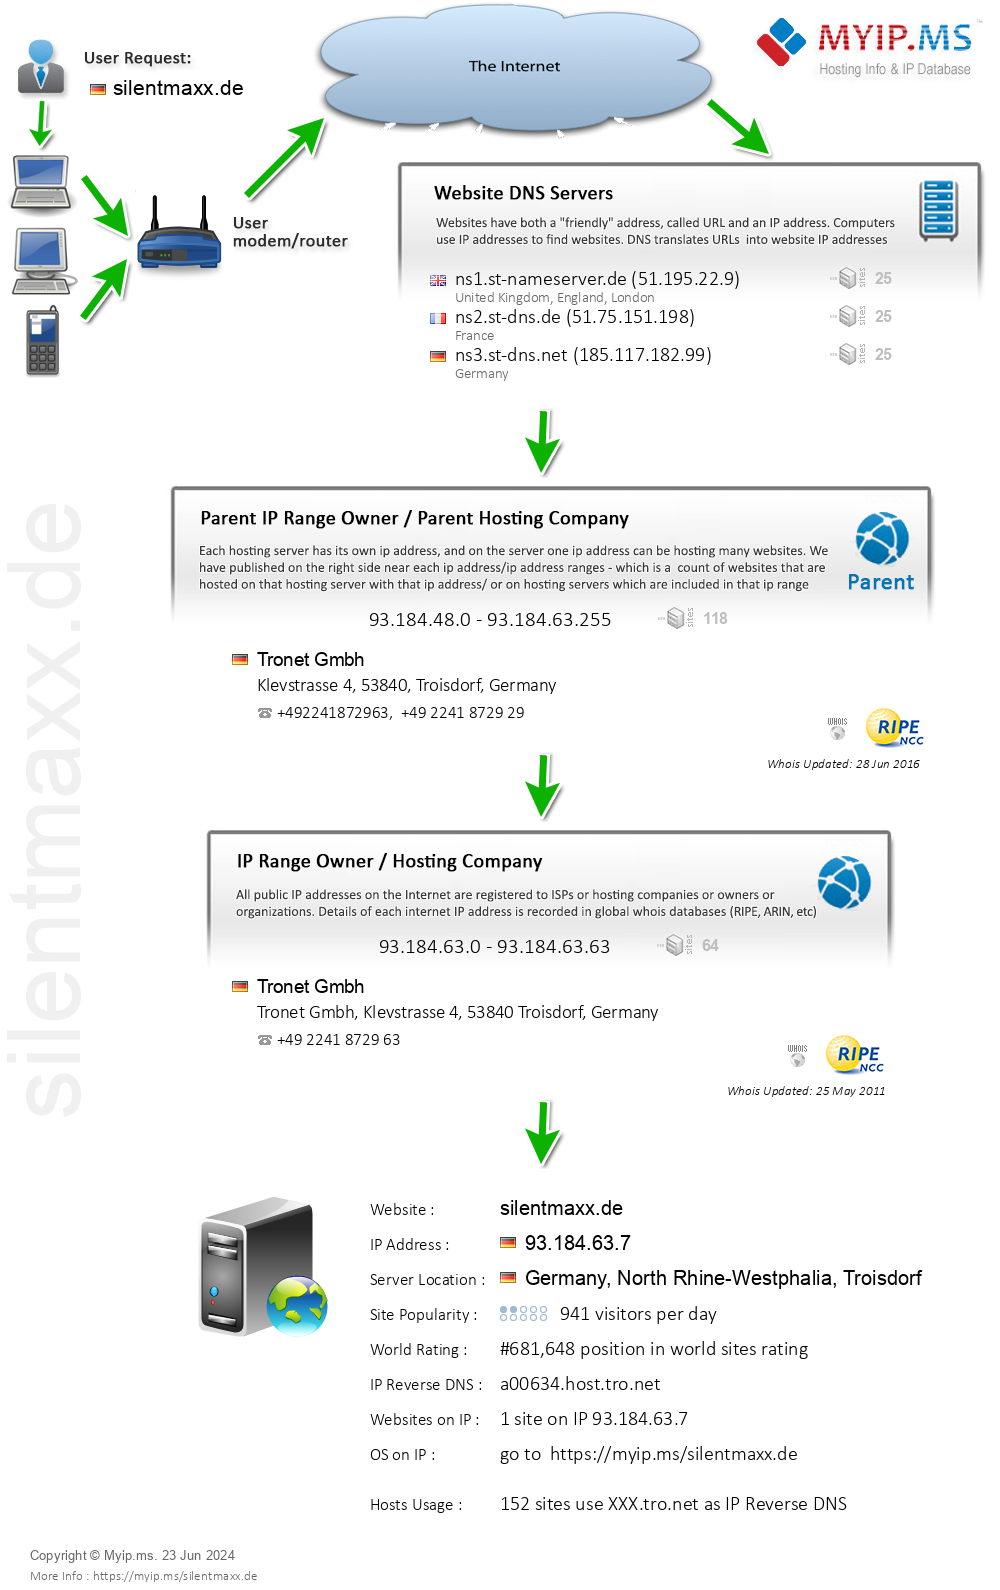 Silentmaxx.de - Website Hosting Visual IP Diagram